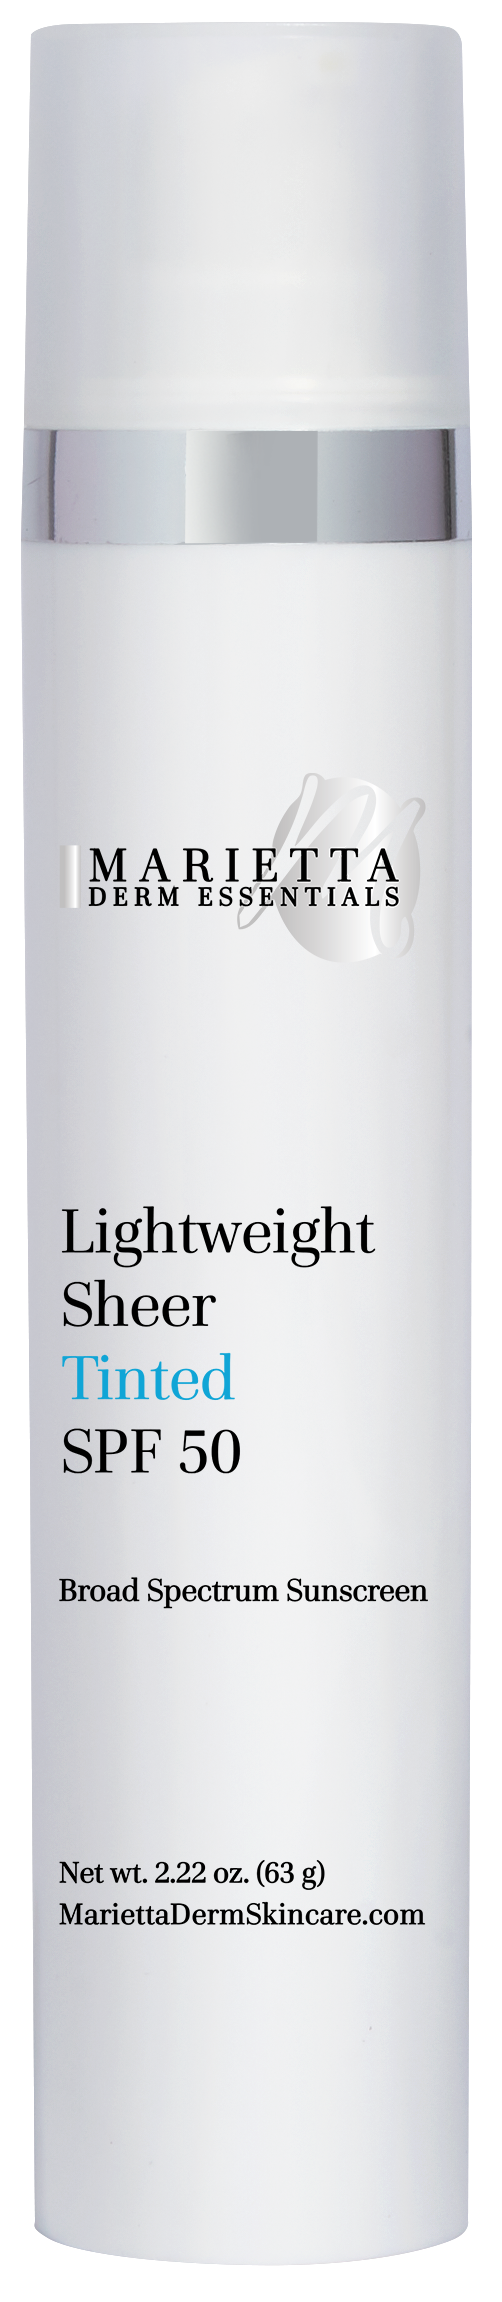 Lightweight Sheer Tinted SPF 50